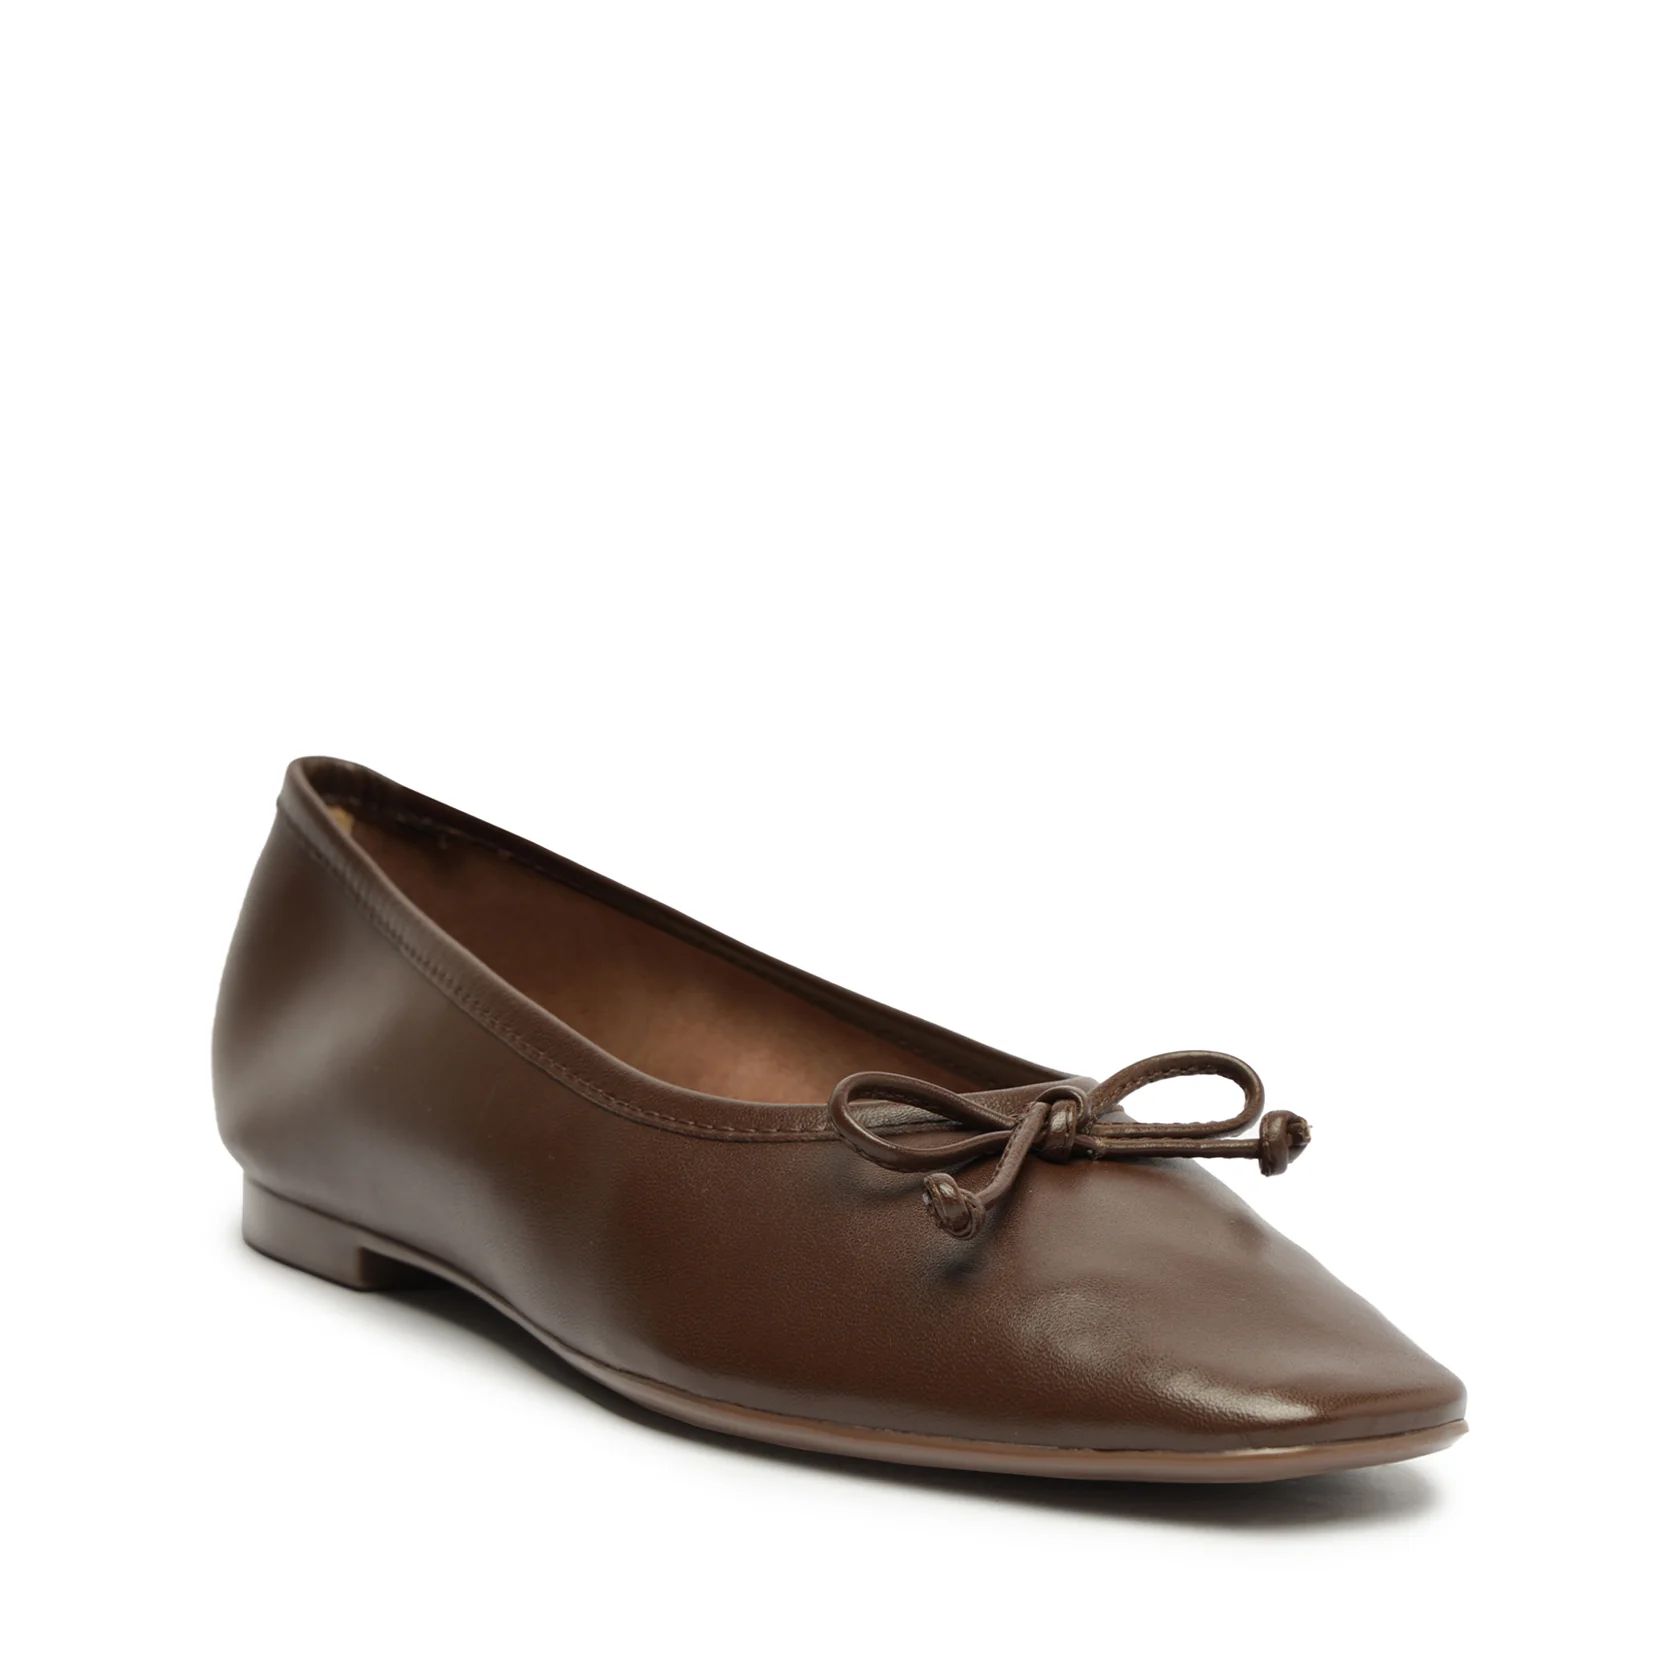 Arissa Rebecca Allen Leather Flat | Schutz Shoes (US)